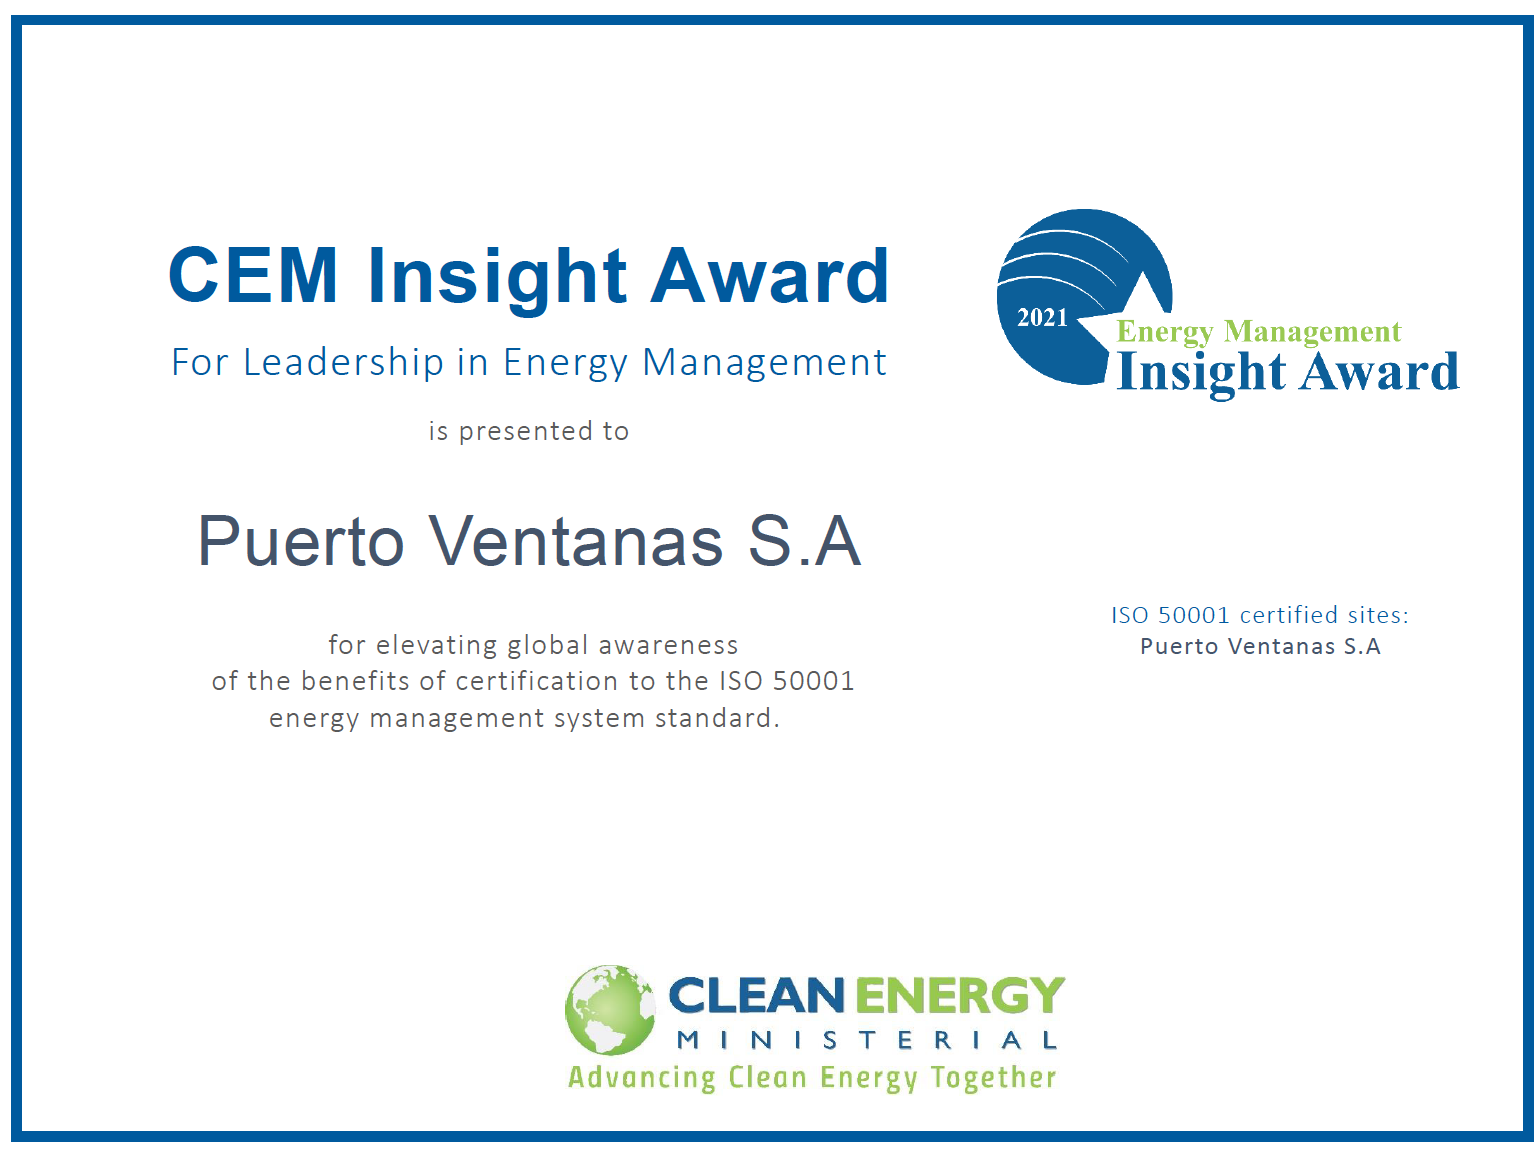 https://puertoventanas.cl/content/uploads/2022/01/01_cem-insight-award.png